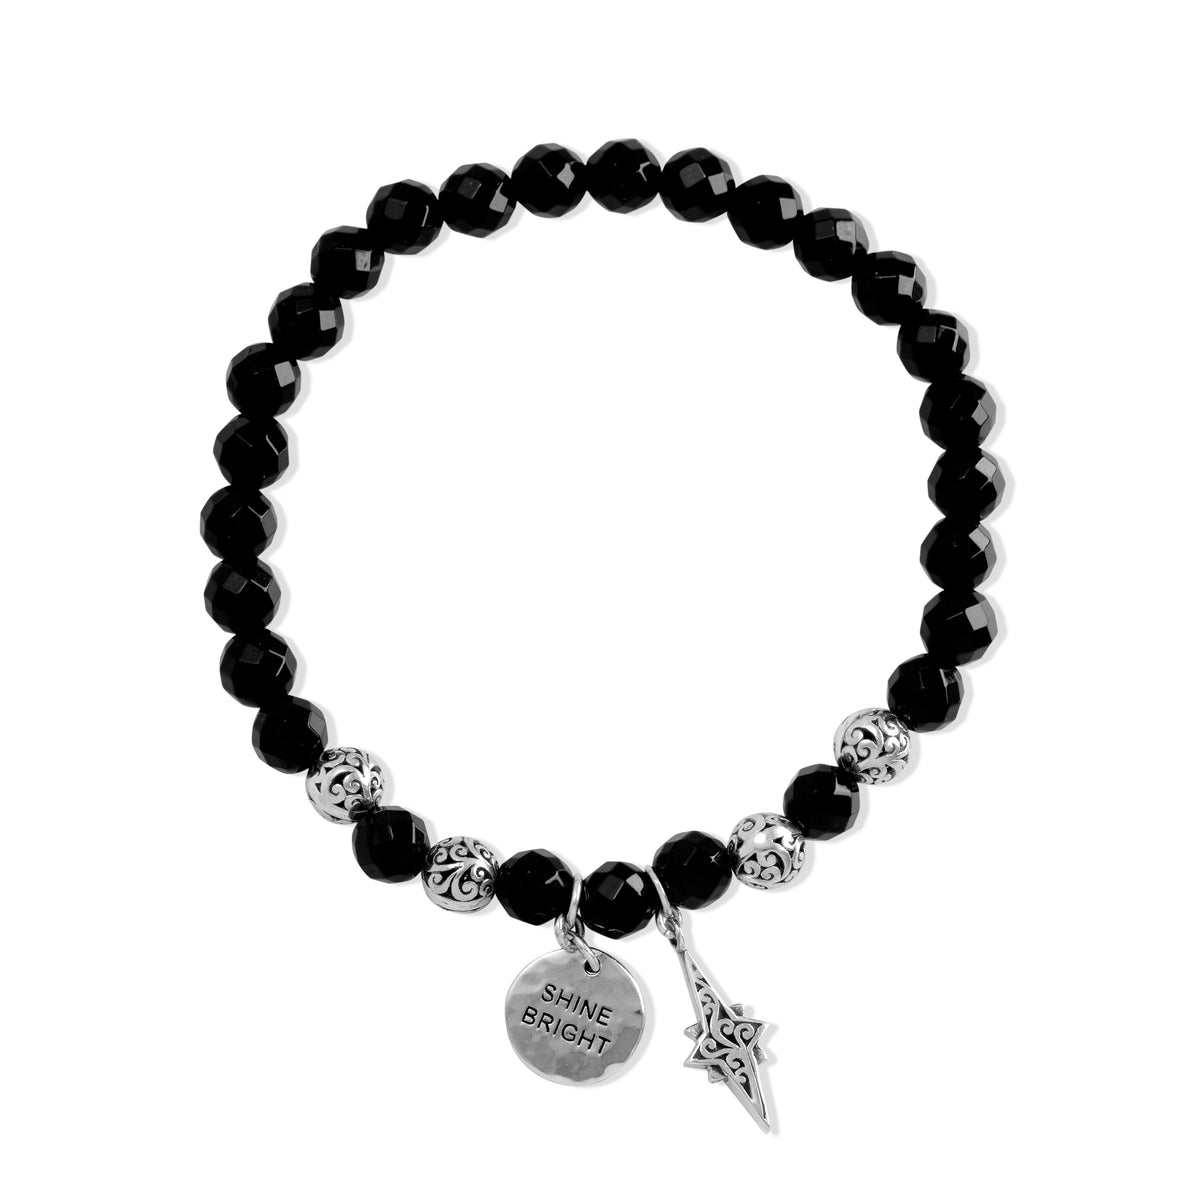 Black Onyx (6mm) & LH Scroll Beads with Star Bright Charms Stretch Bracelet